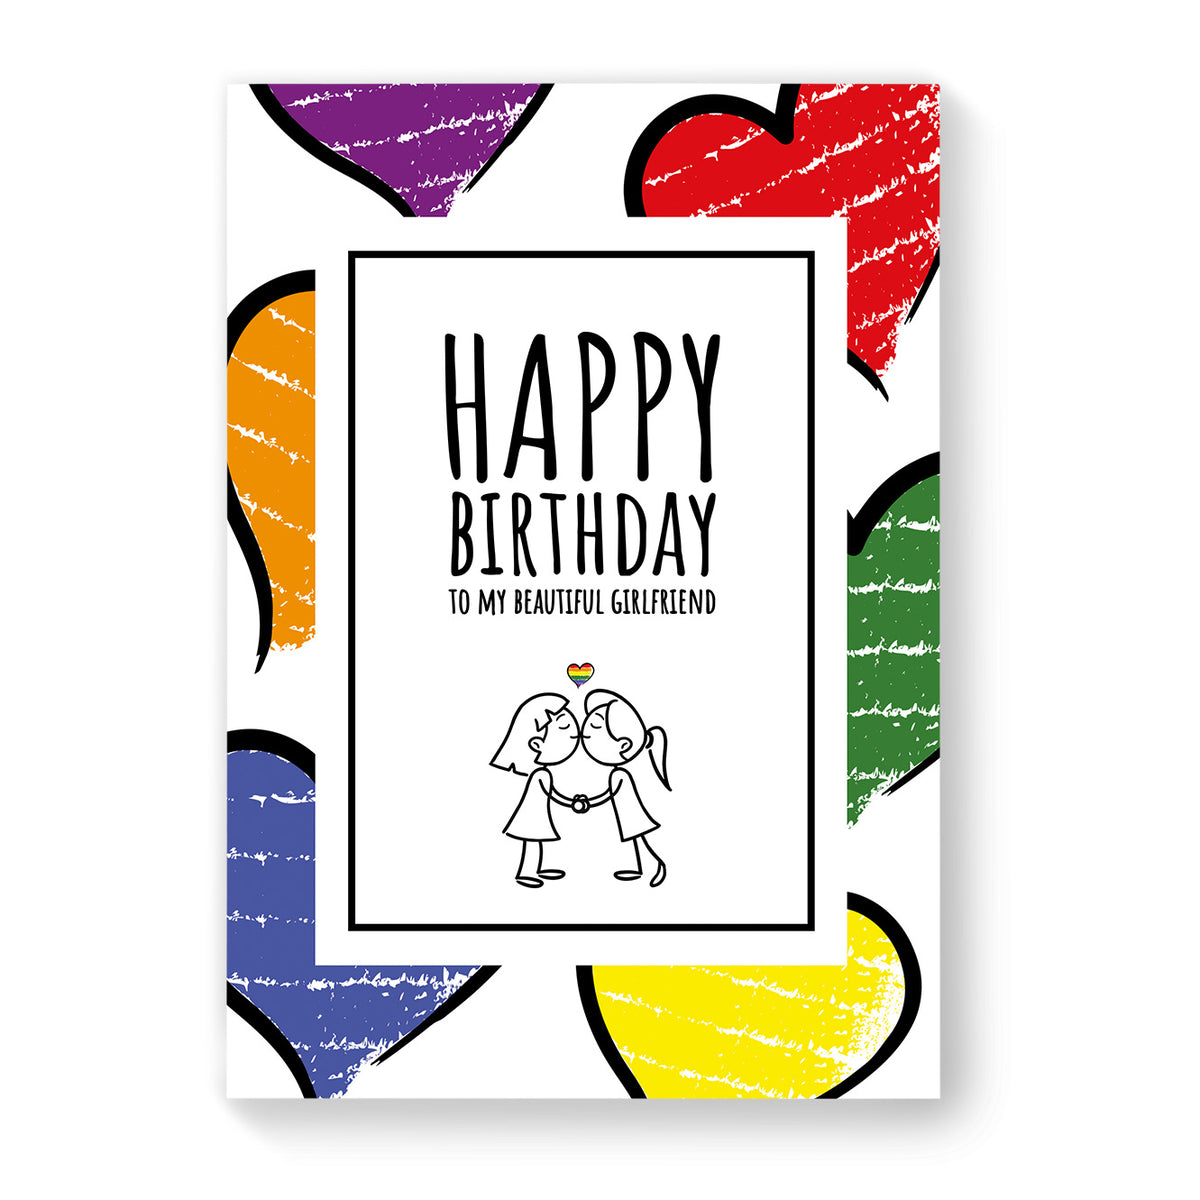 Happy Birthday to my beautiful girlfriend - Lesbian Gay Birthday Card - Large Heart | Gift